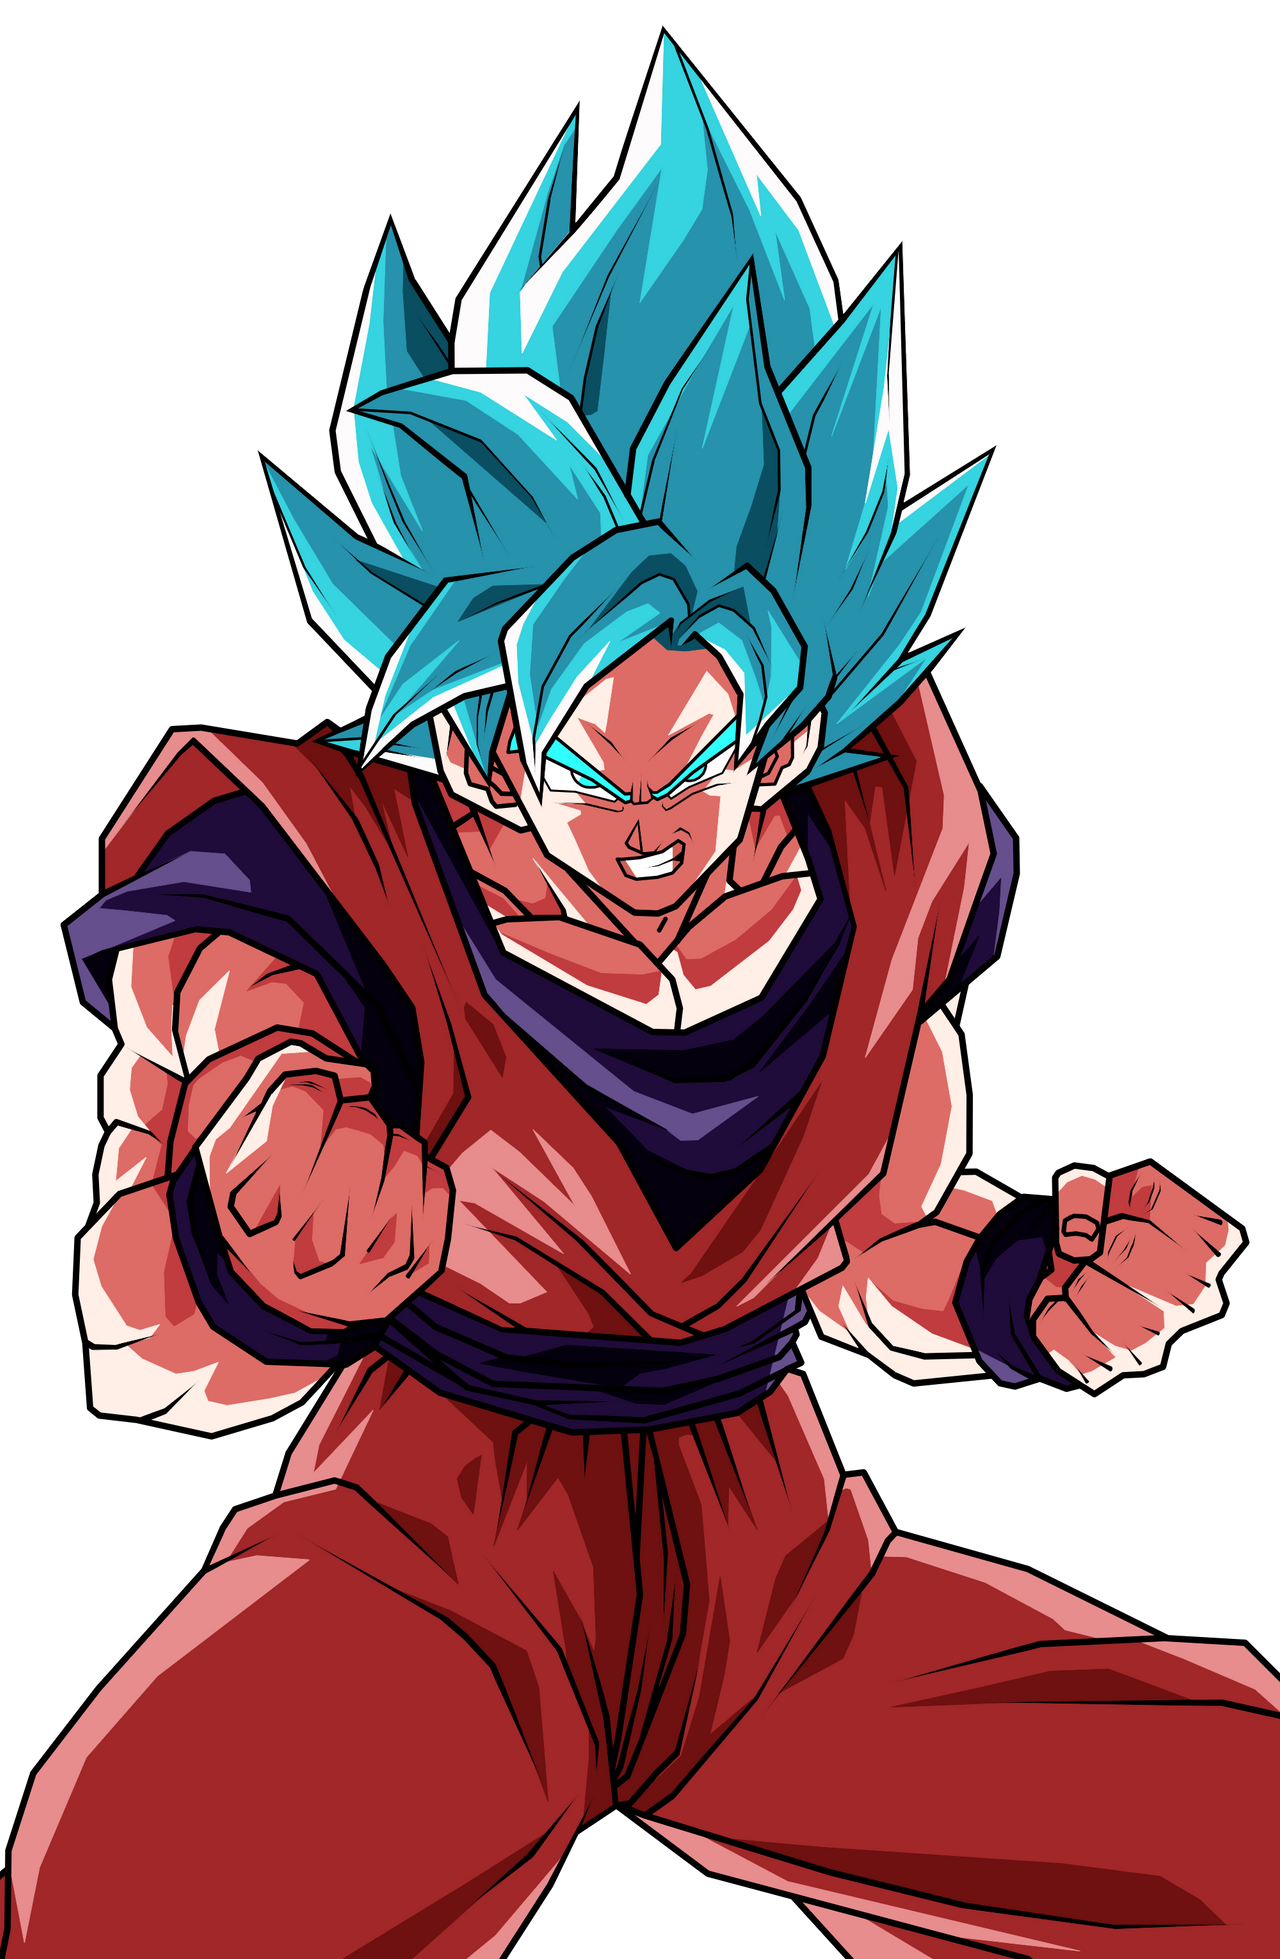 Goku Super Saiyan Blue Kaioken by ChronoFz on DeviantArt